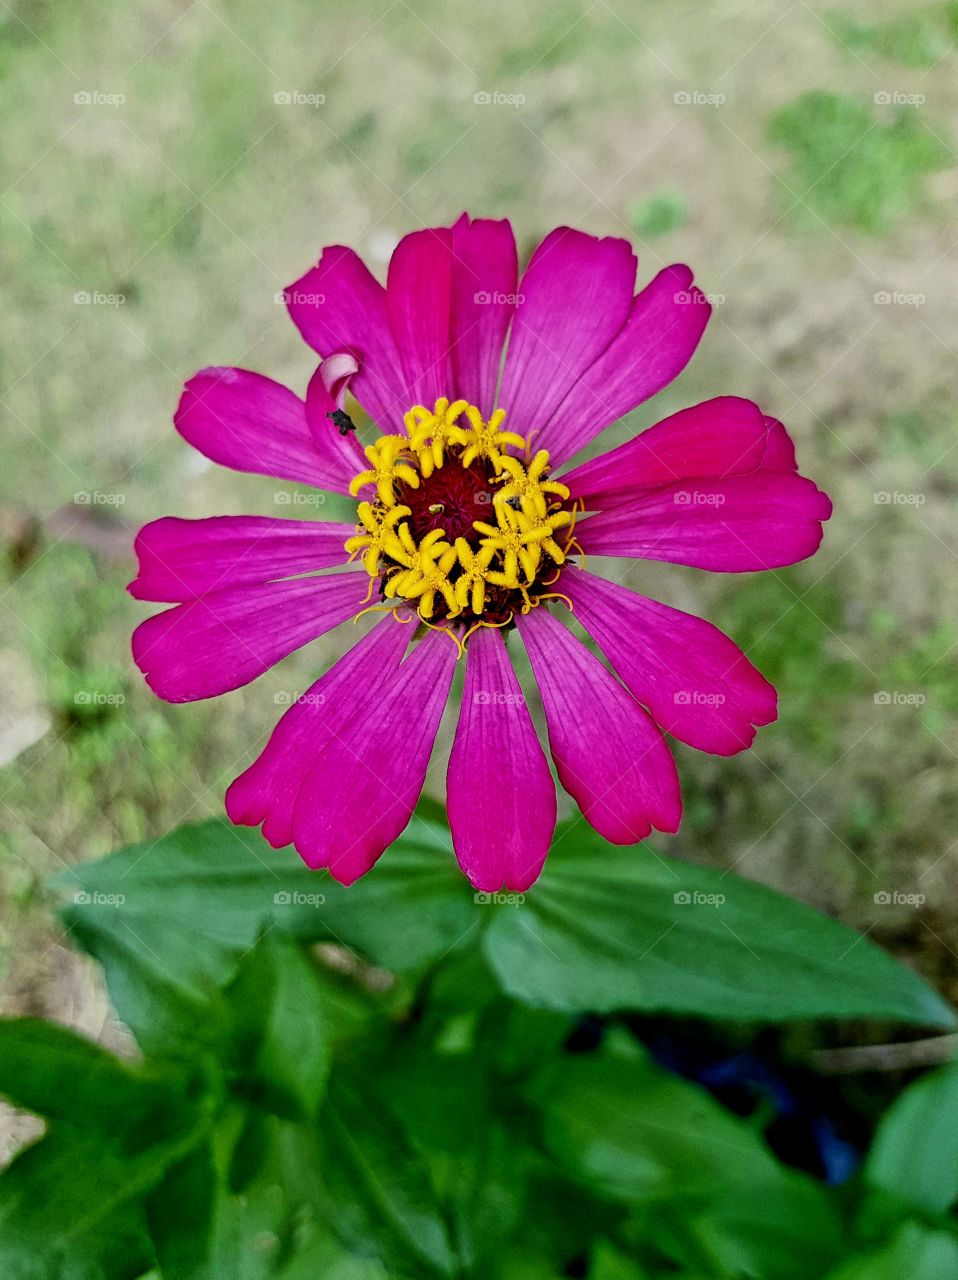 A beuatiful flower in outdoors .